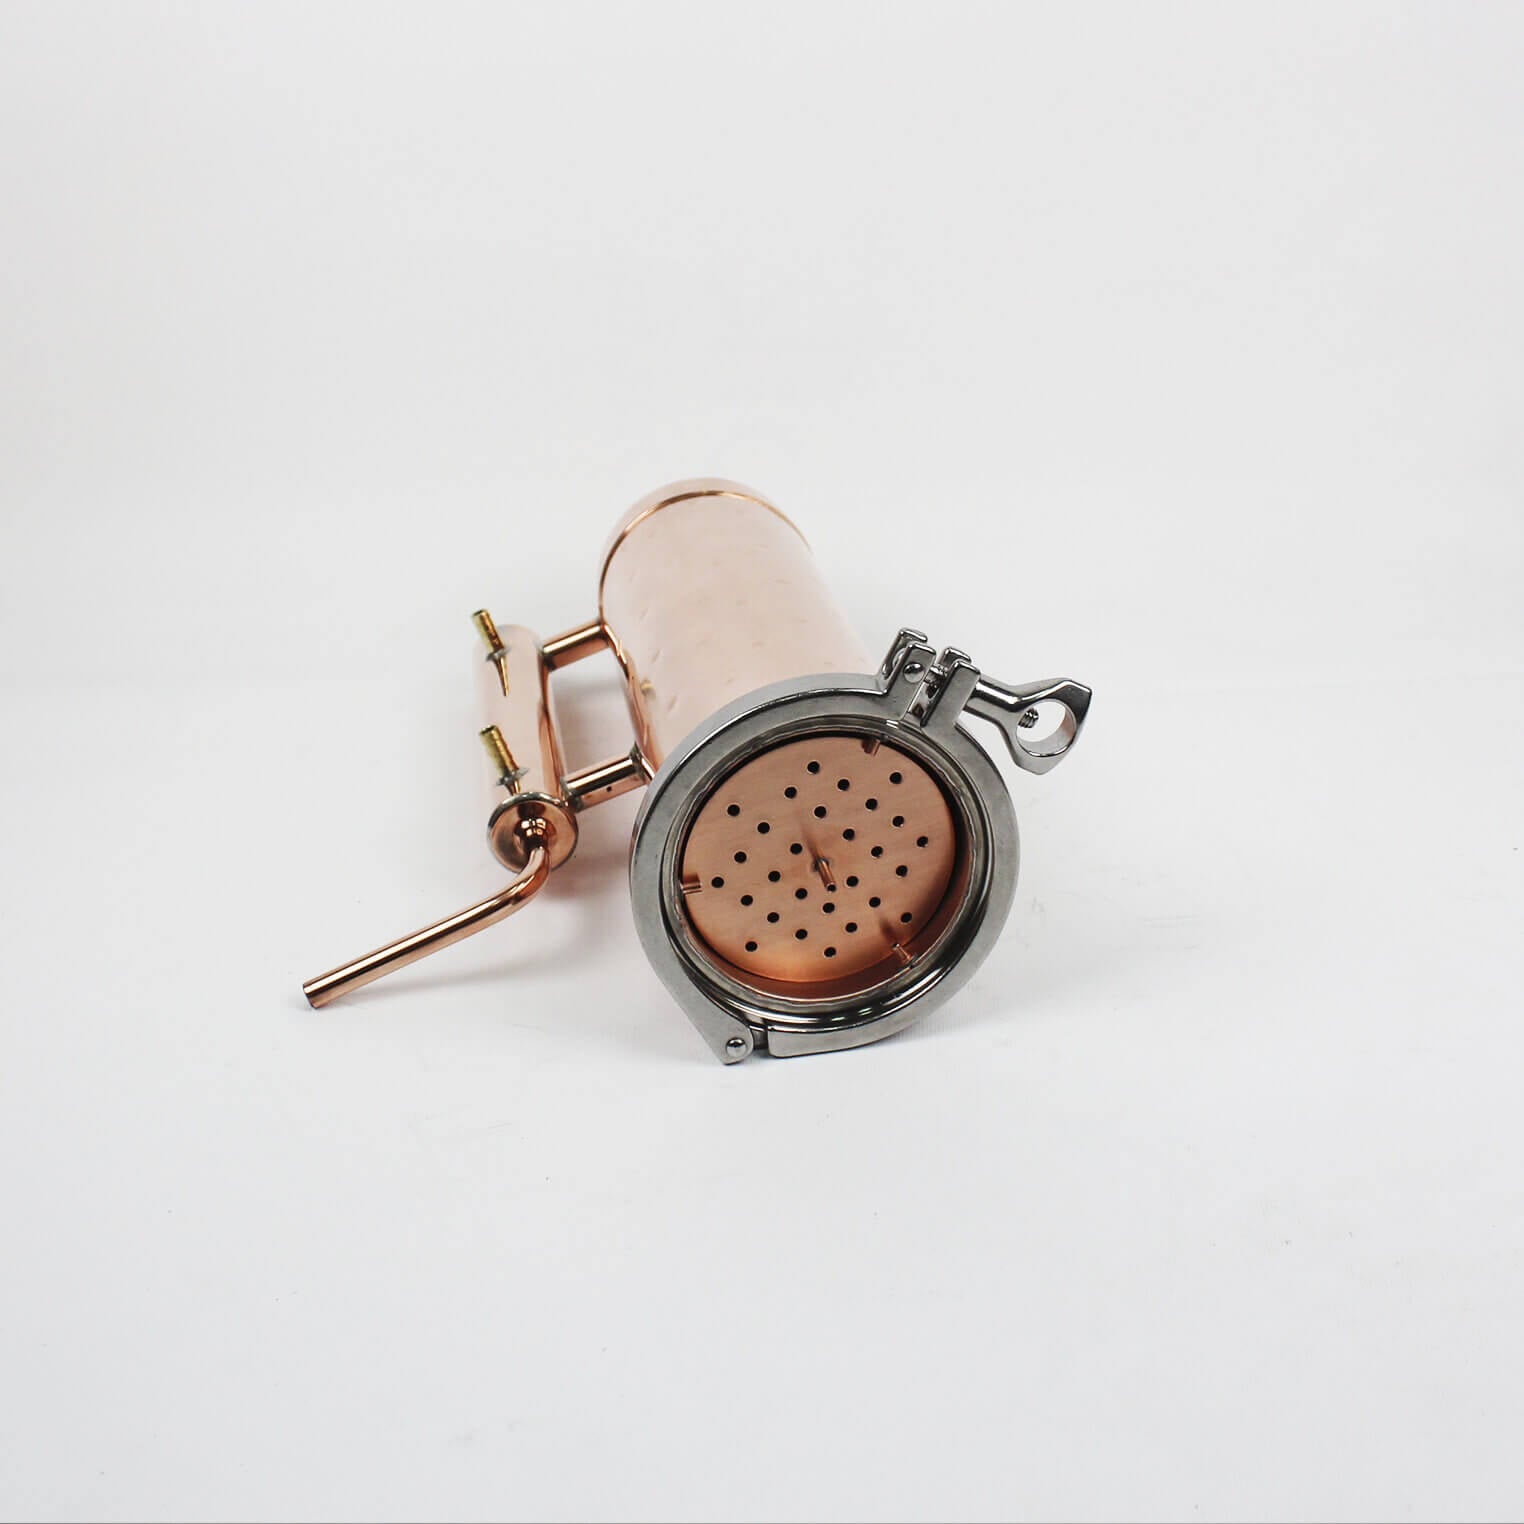 Copper moonshine still 4.8G (18L)  column 0.53G (2L) [ pot still ] – Copper  Pro